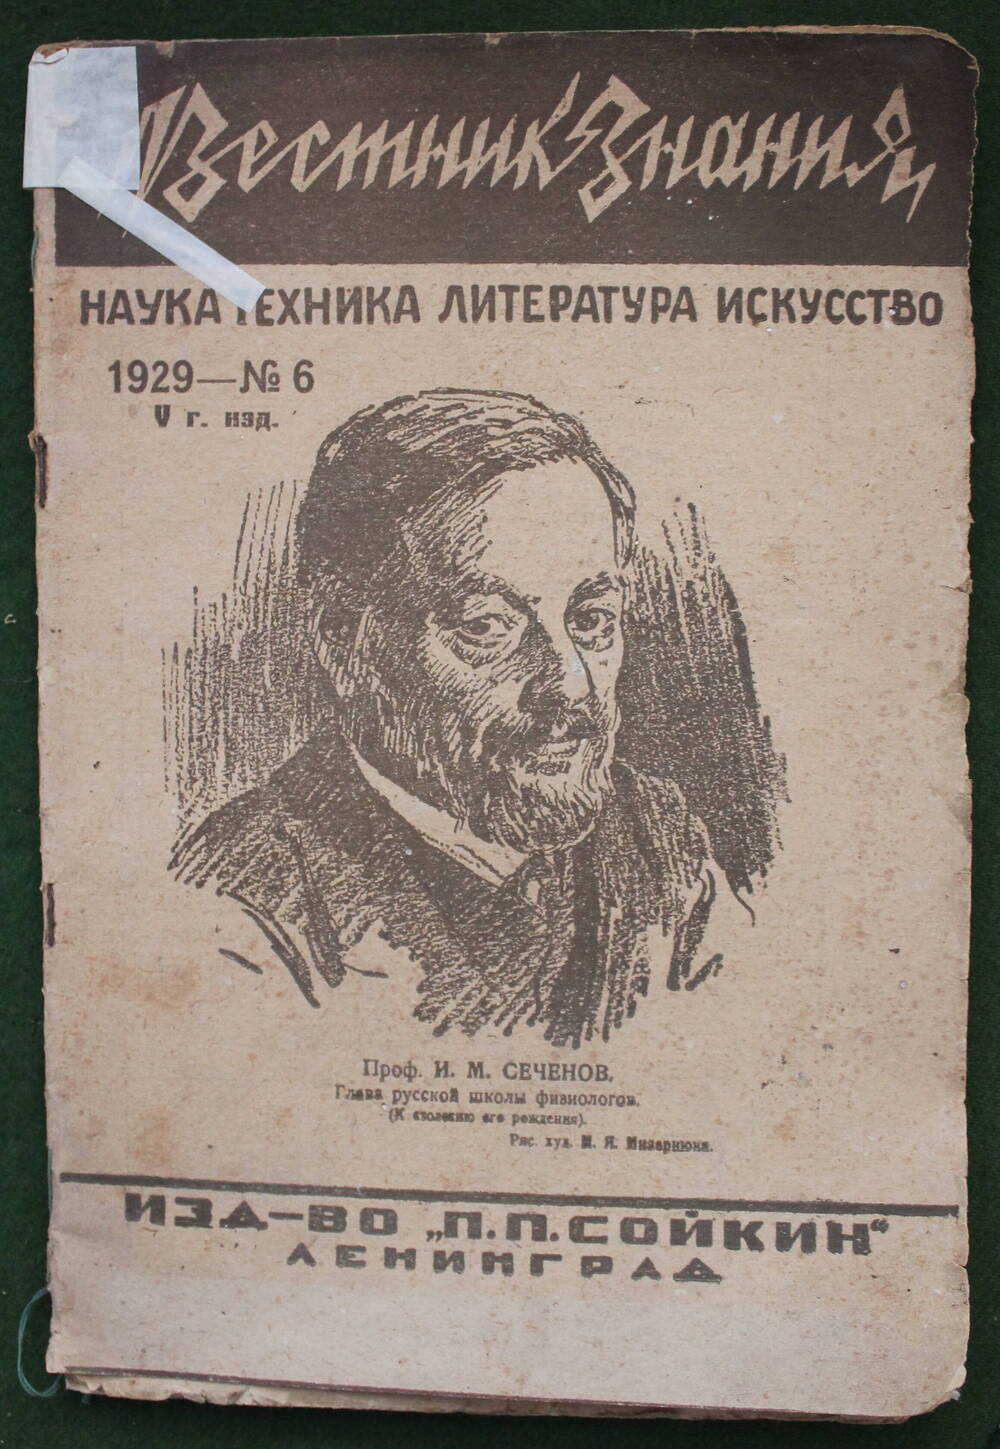 Журнал
«Вестник знания», № 6, 1929 г.